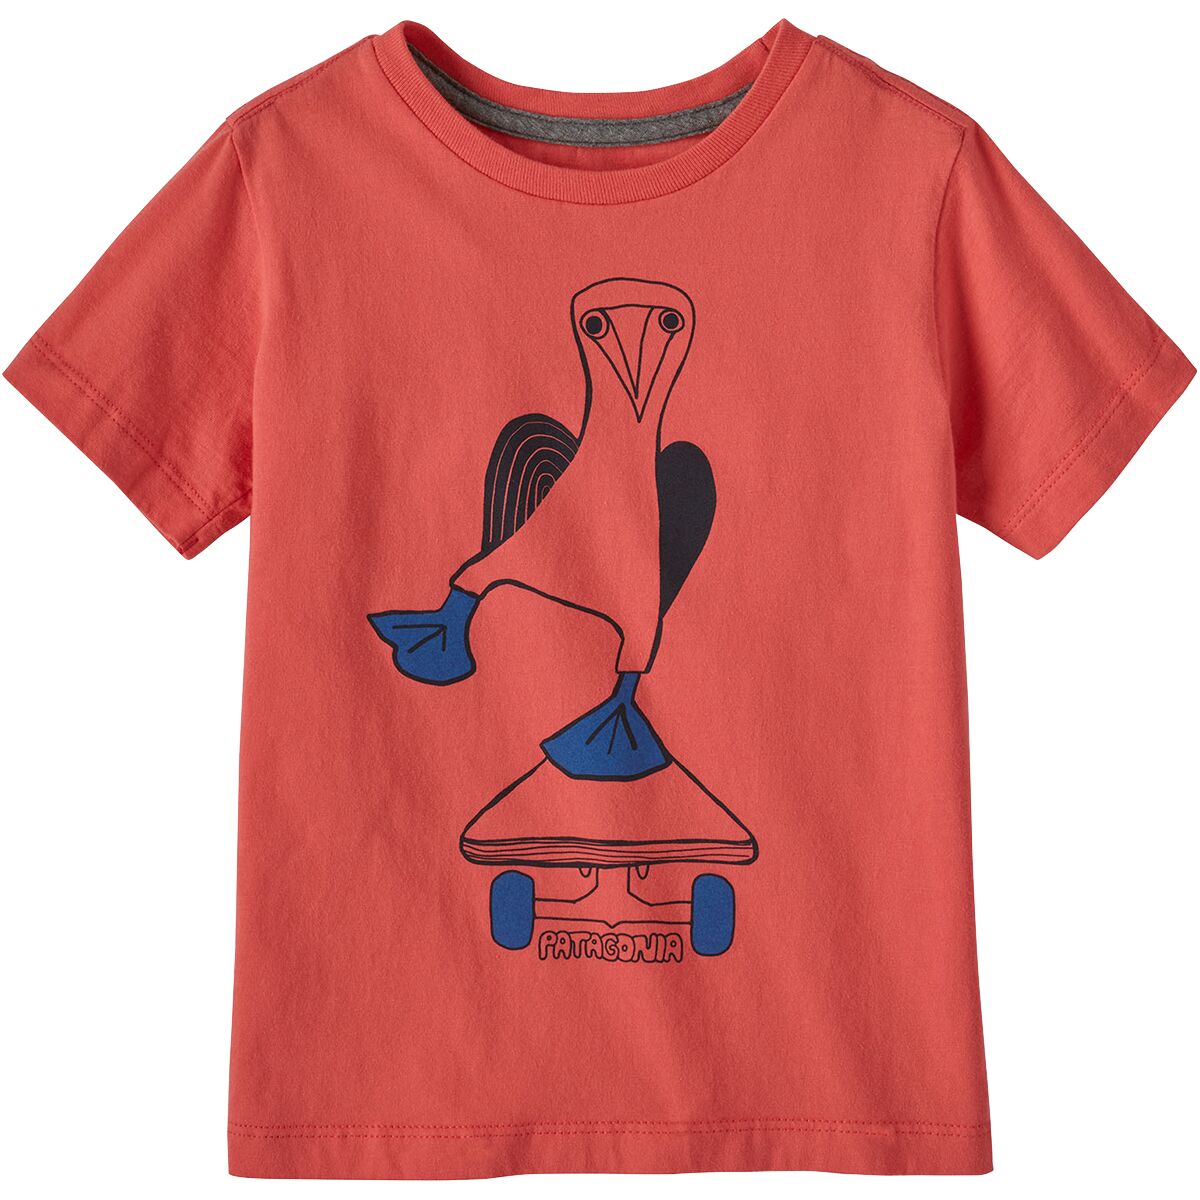 Patagonia Regenerative Organic Cotton Graphic T-Shirt - Toddlers'